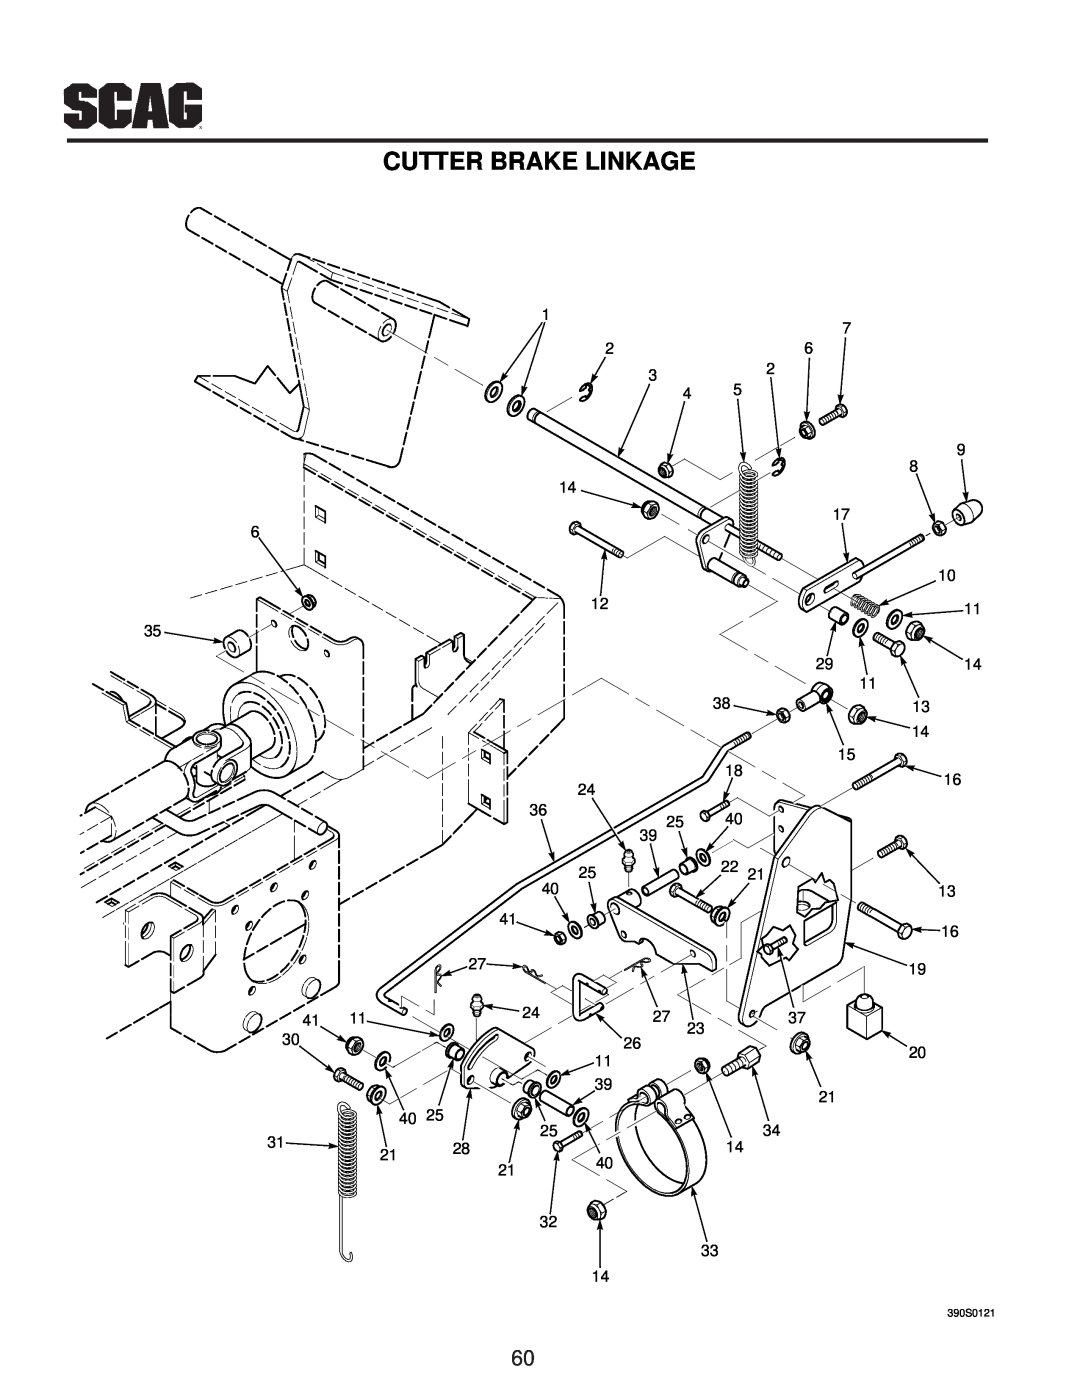 Scag Power Equipment MAG manual Cutter Brake Linkage, 390S0121 